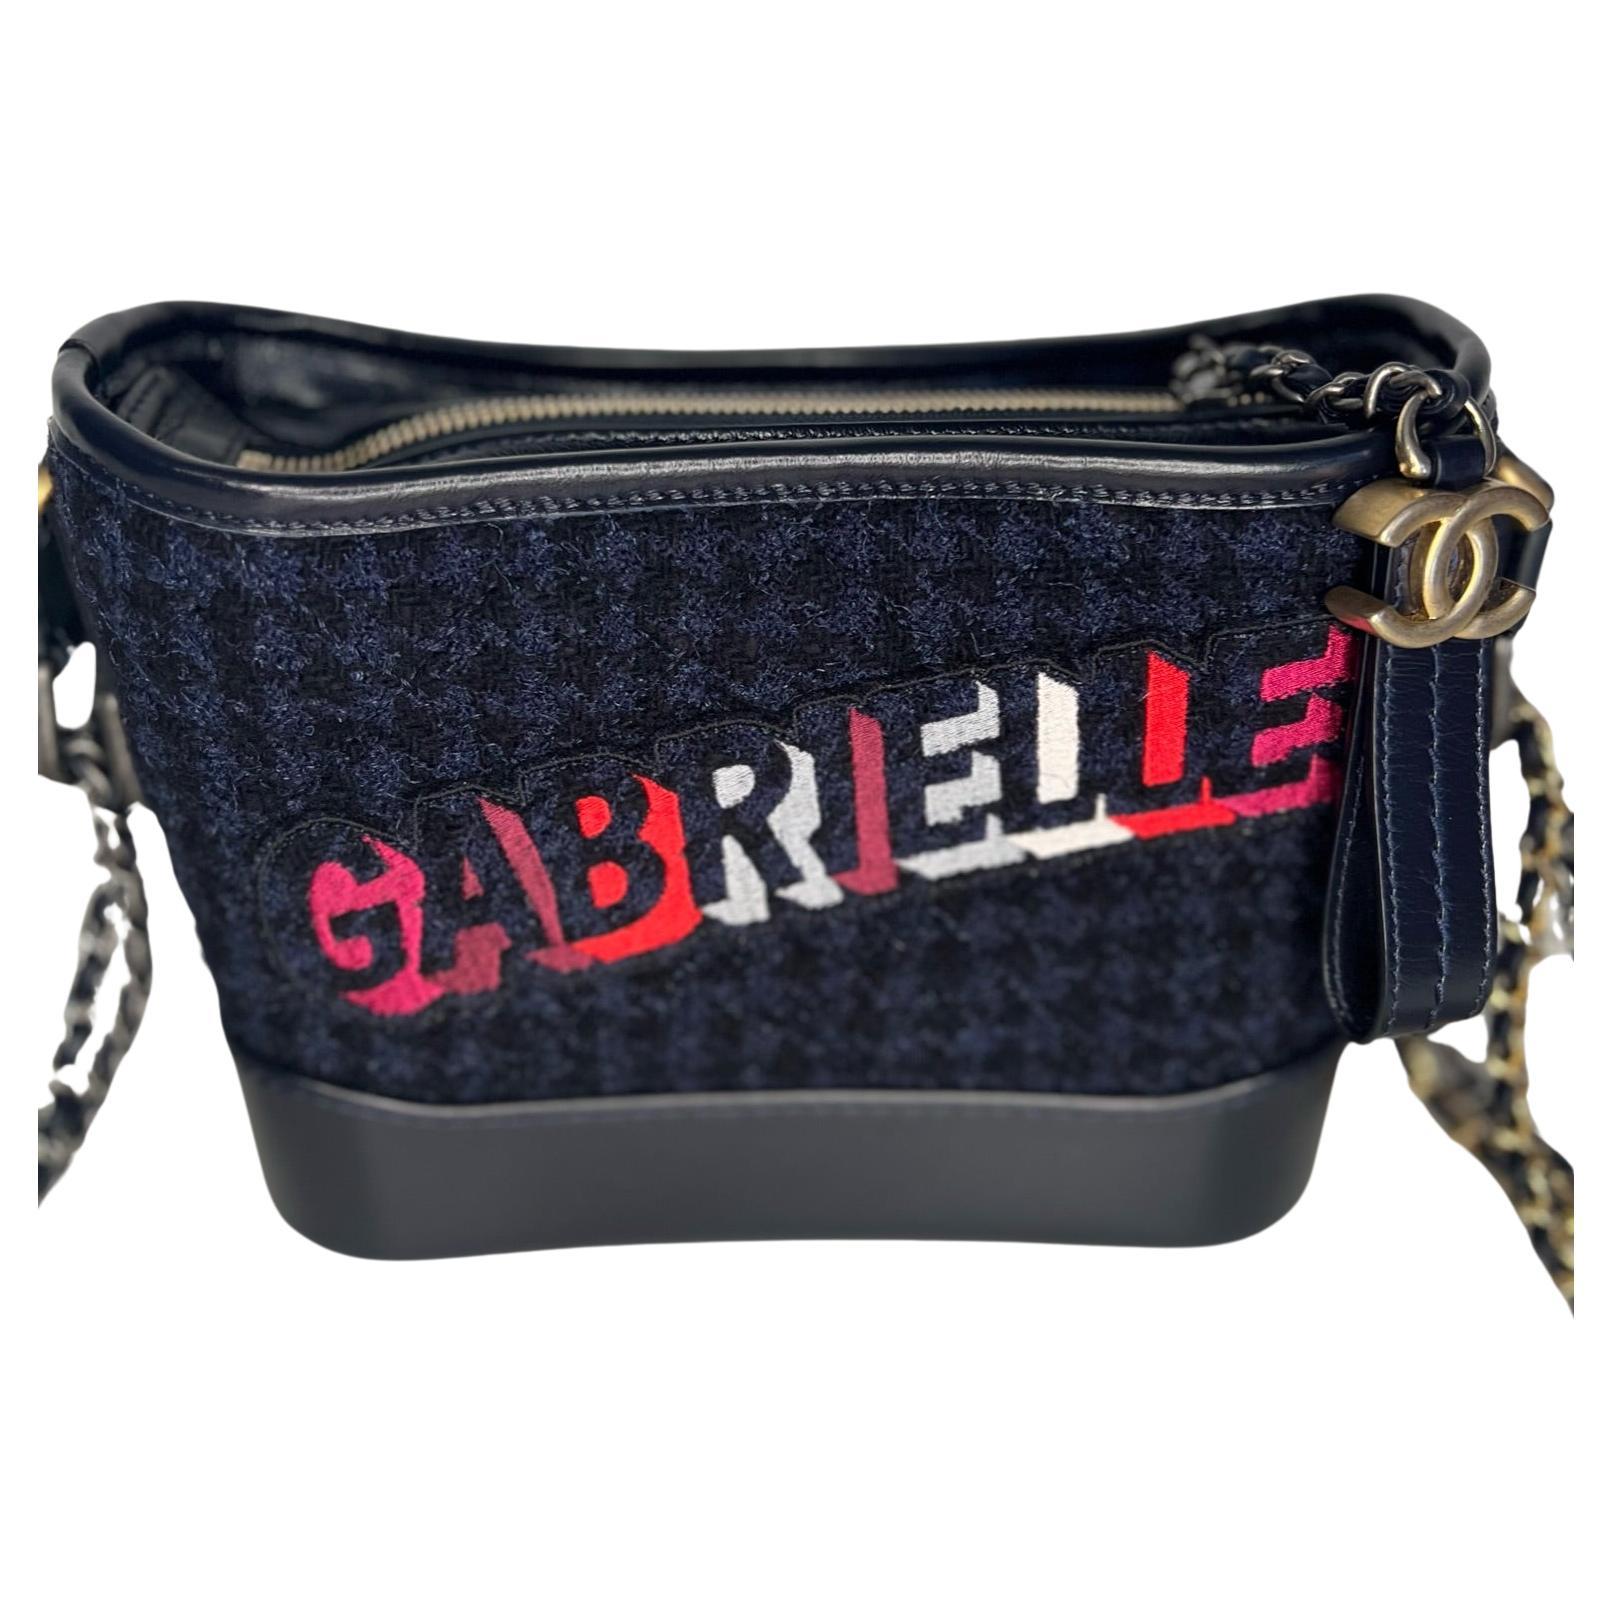 Chanel Chanel's Gabrielle Handbag